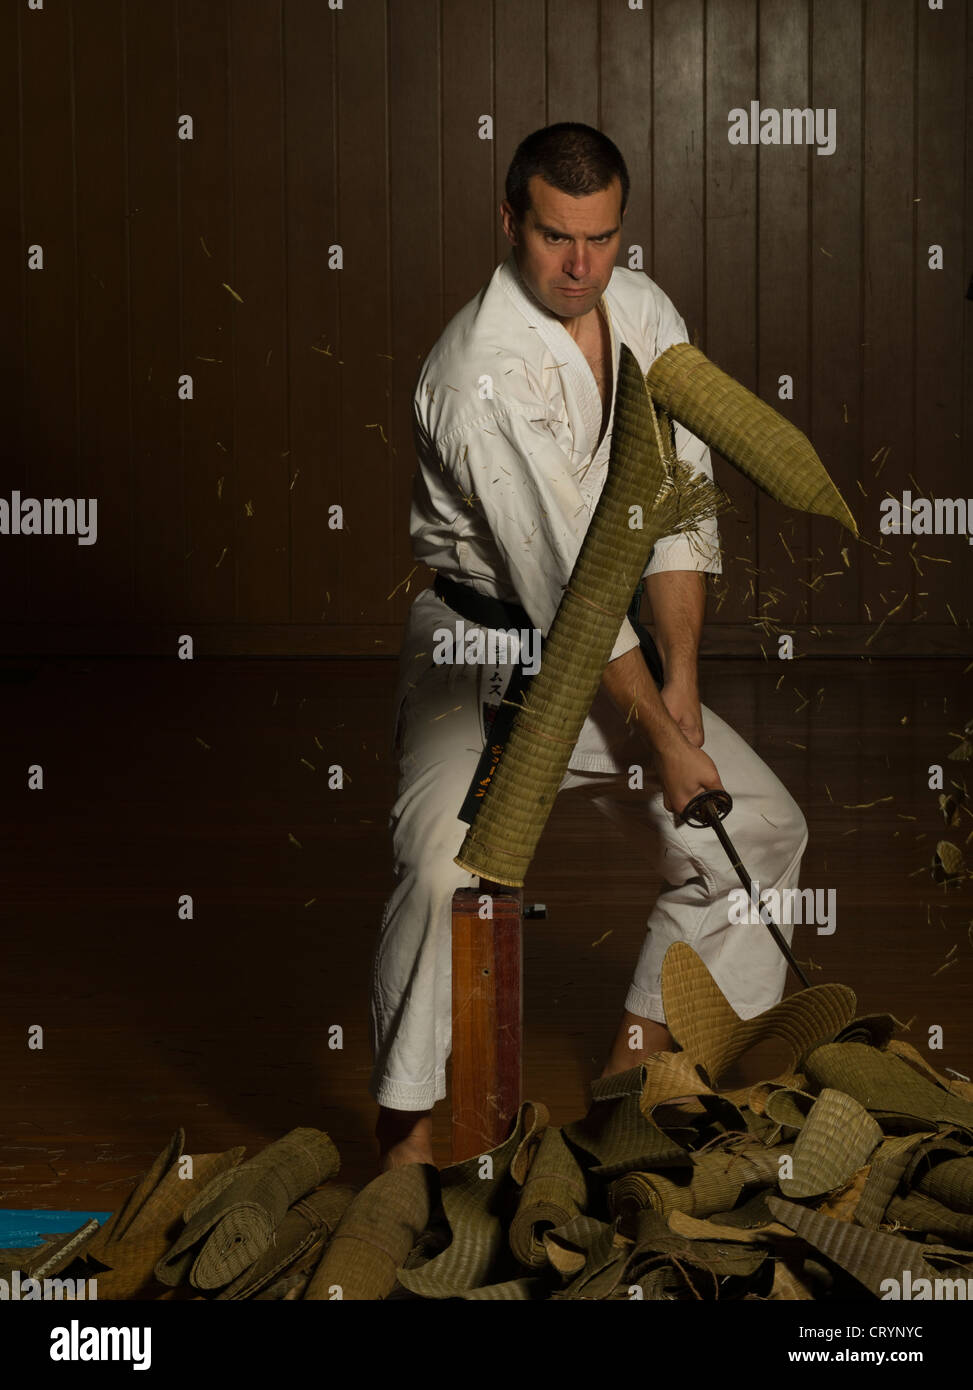 Iaido training - cutting rolled up tatami matting with a samurai sword. Okinawa, Japan Stock Photo